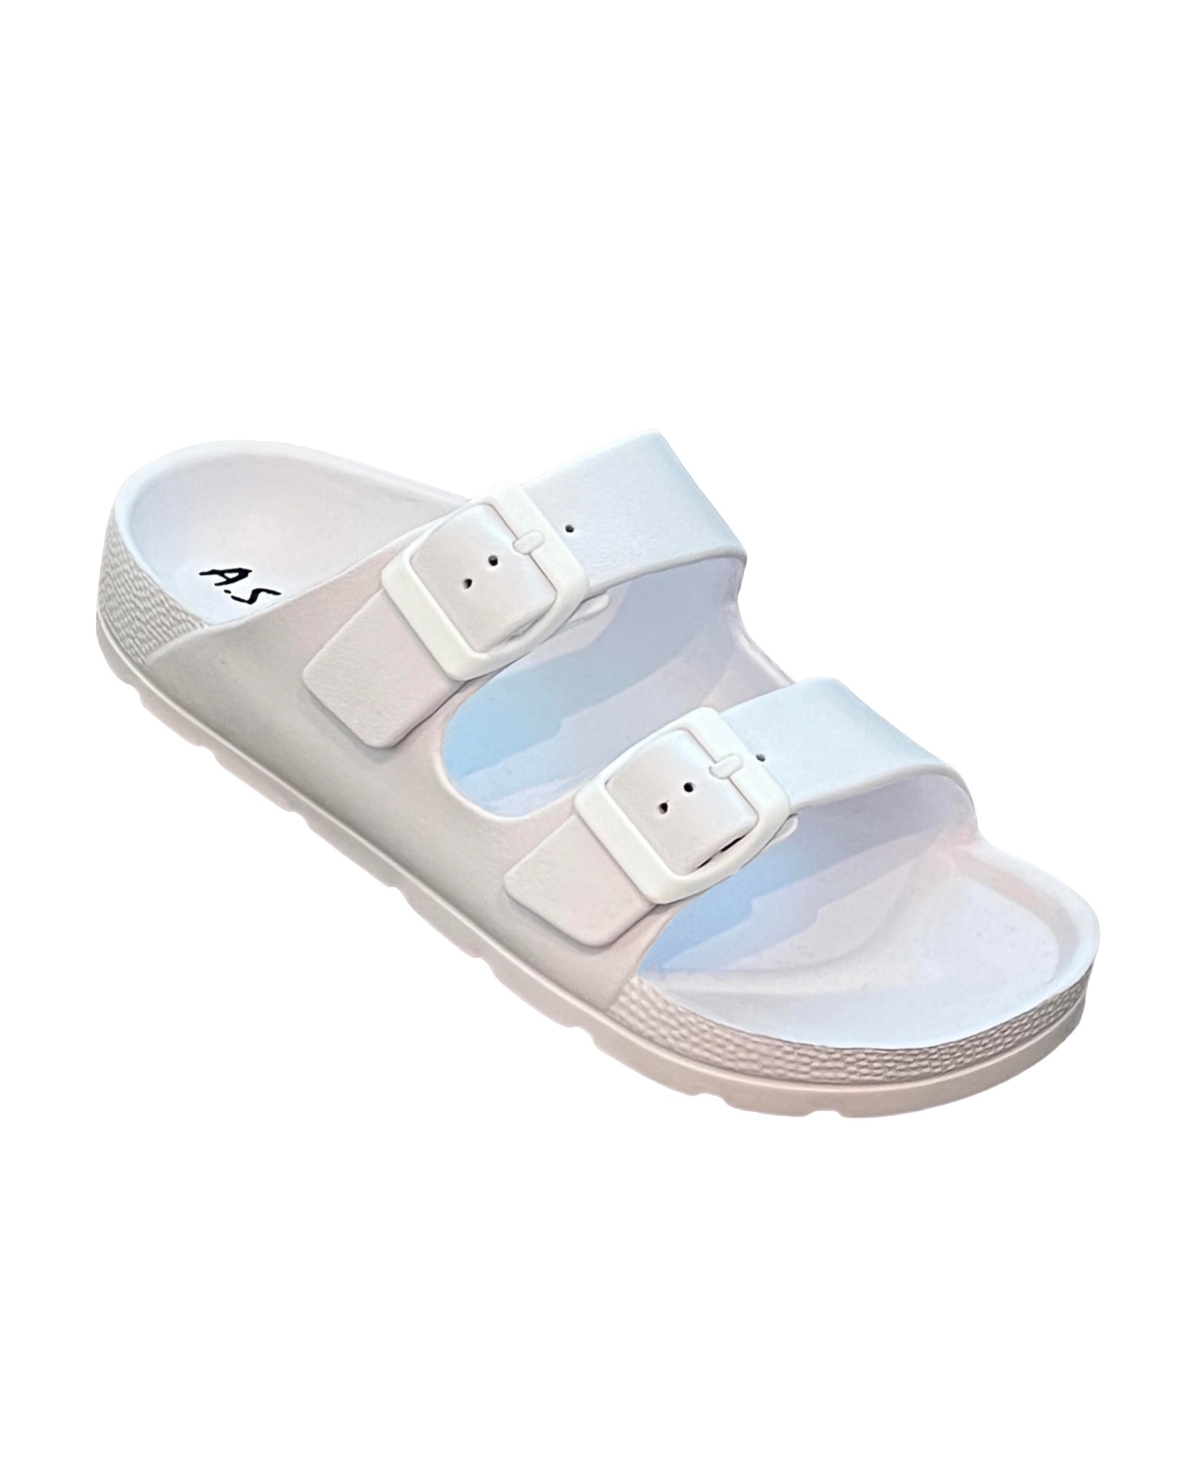 Comfort Slides Double Buckle Adjustable Scooby Flat Sandals - Grey